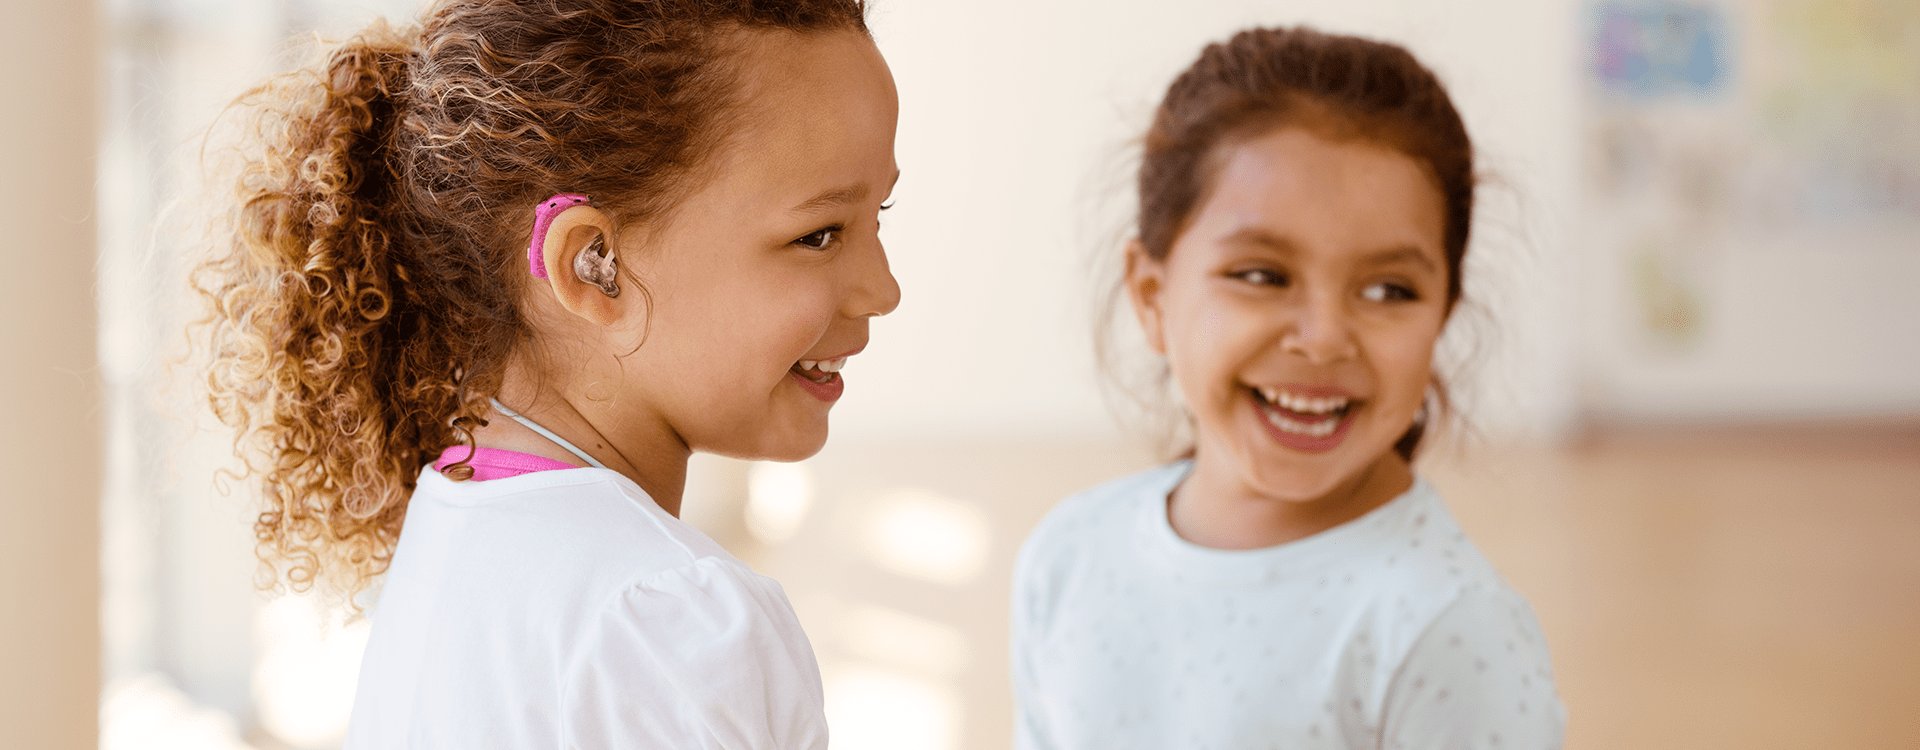 petites filles portant appareil auditif rigolent -adaptation bimodale